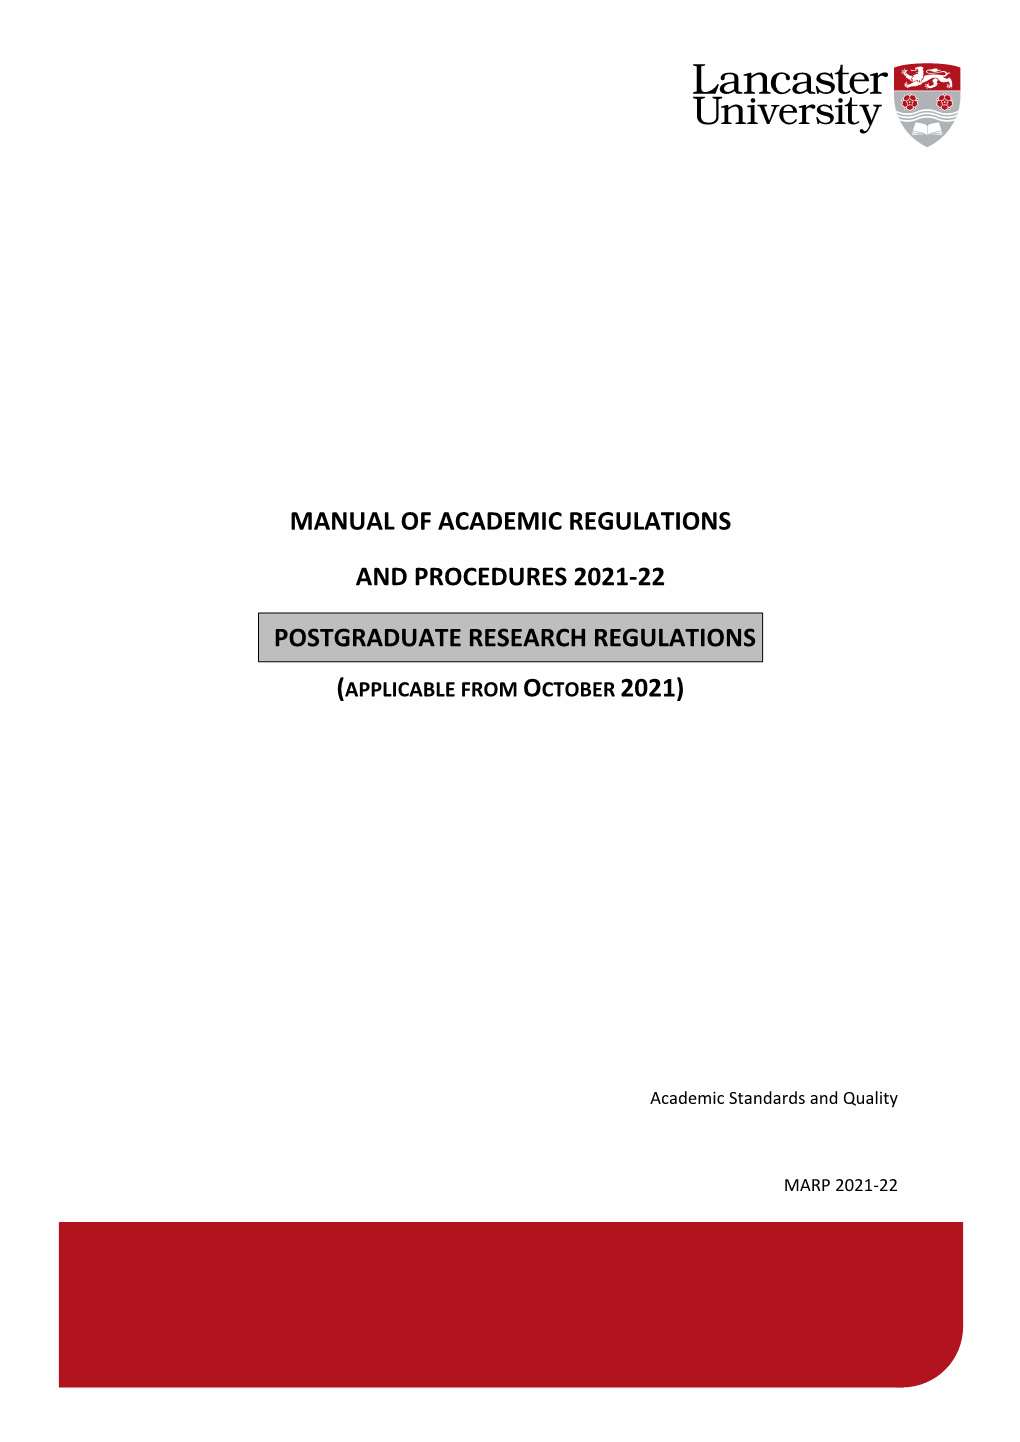 Manual of Academic Regulations and Procedures 2021-22 Postgraduate Research Regulations